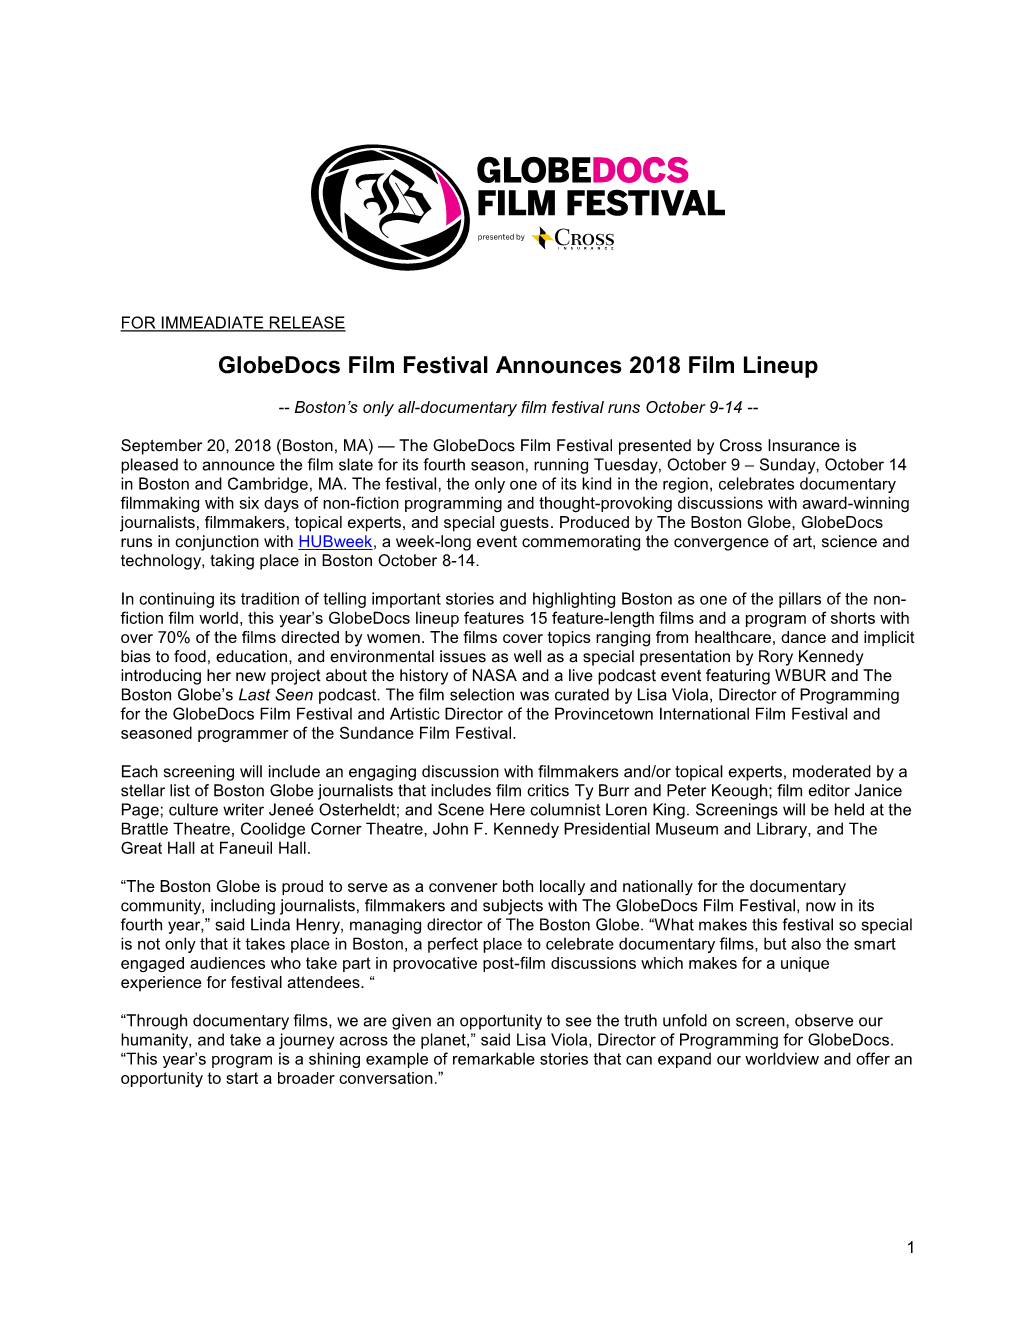 Globedocs Film Festival Announces 2018 Film Lineup